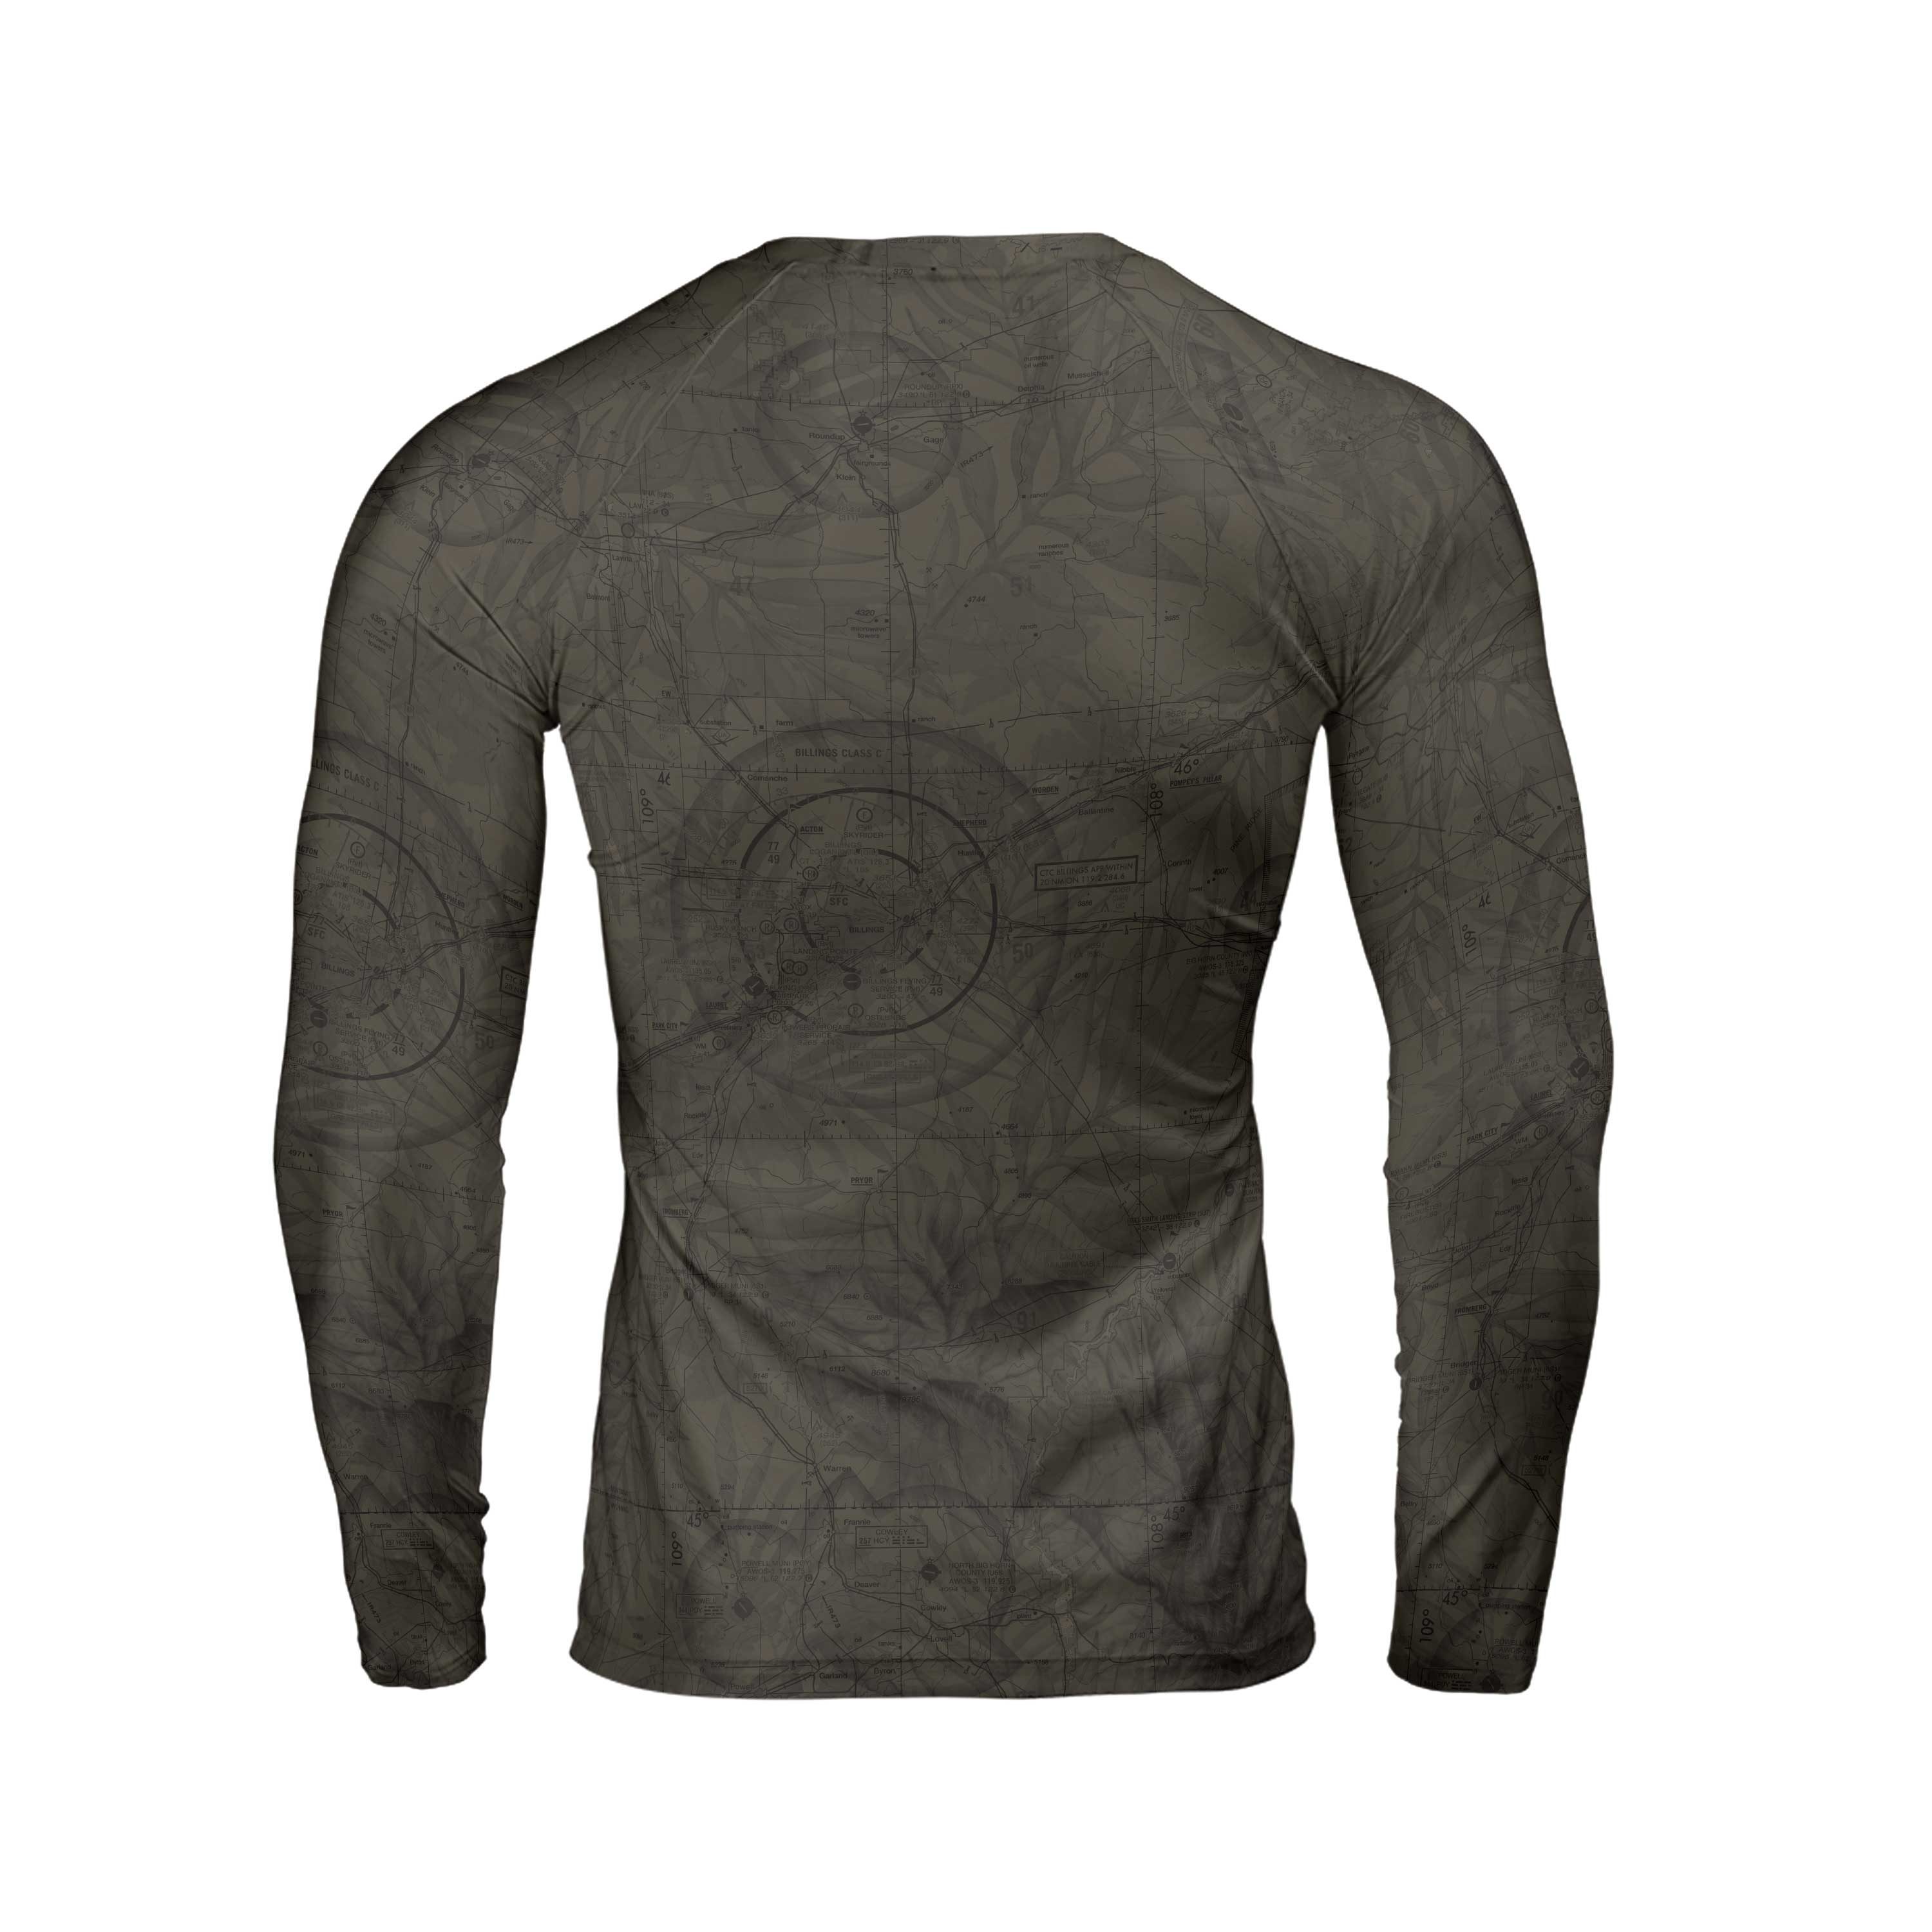 Long Sleeve Rash Guard The Billings Sectional Long-Sleeve Compression Base Layer Shirt